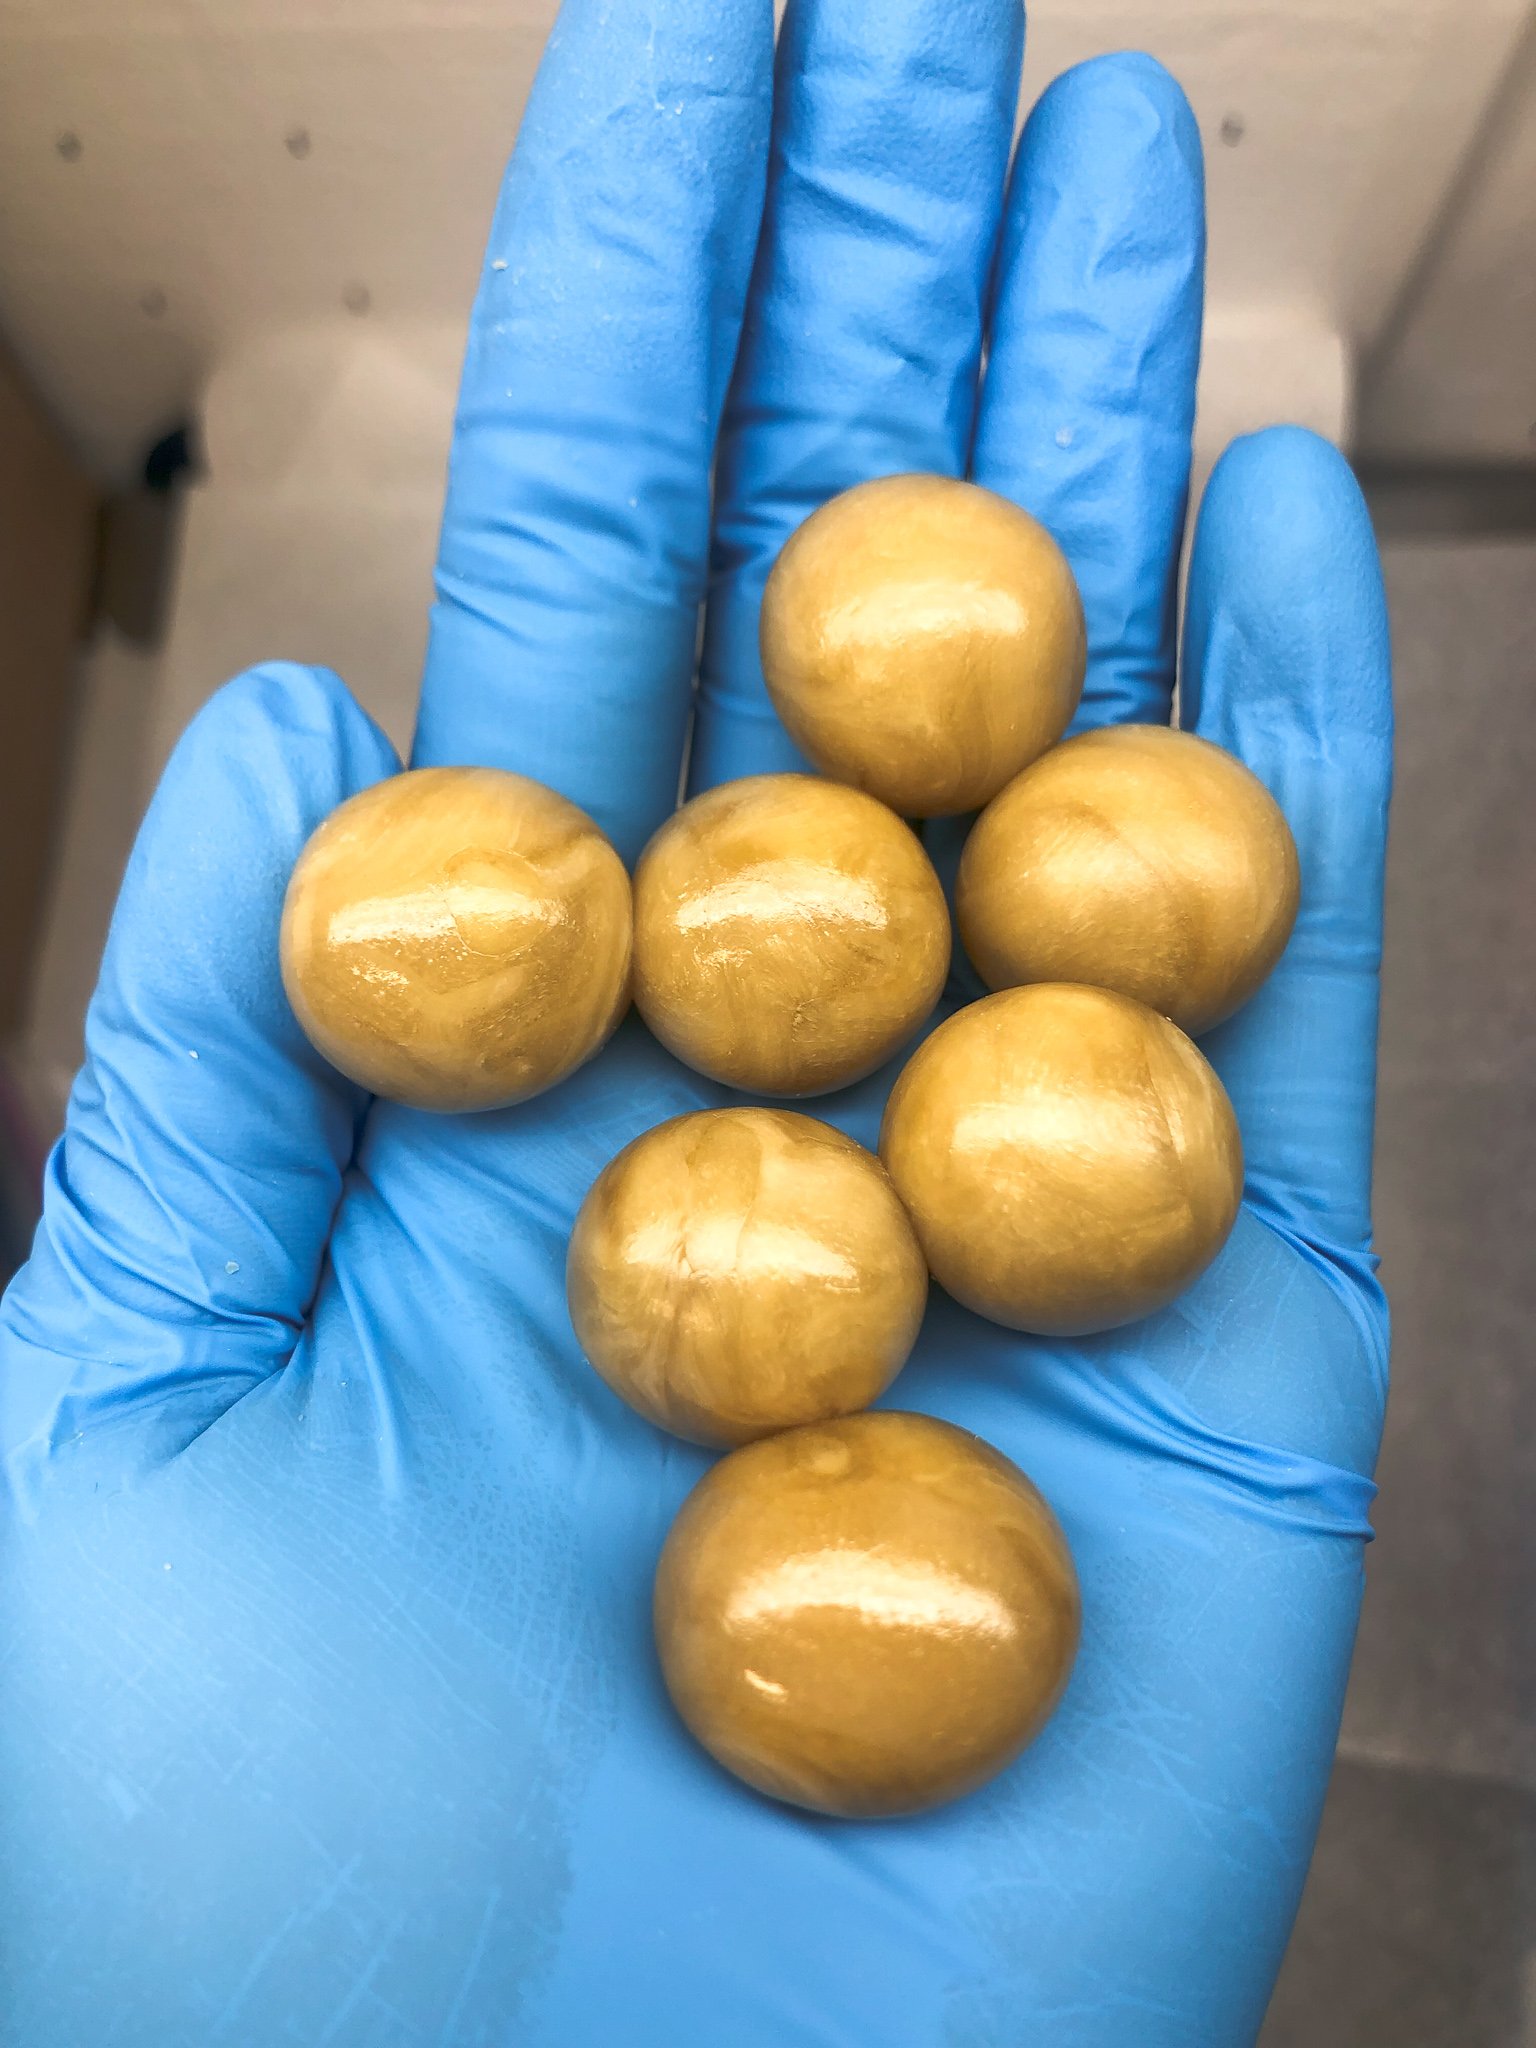 Temple balls douradas de haxixe na mão